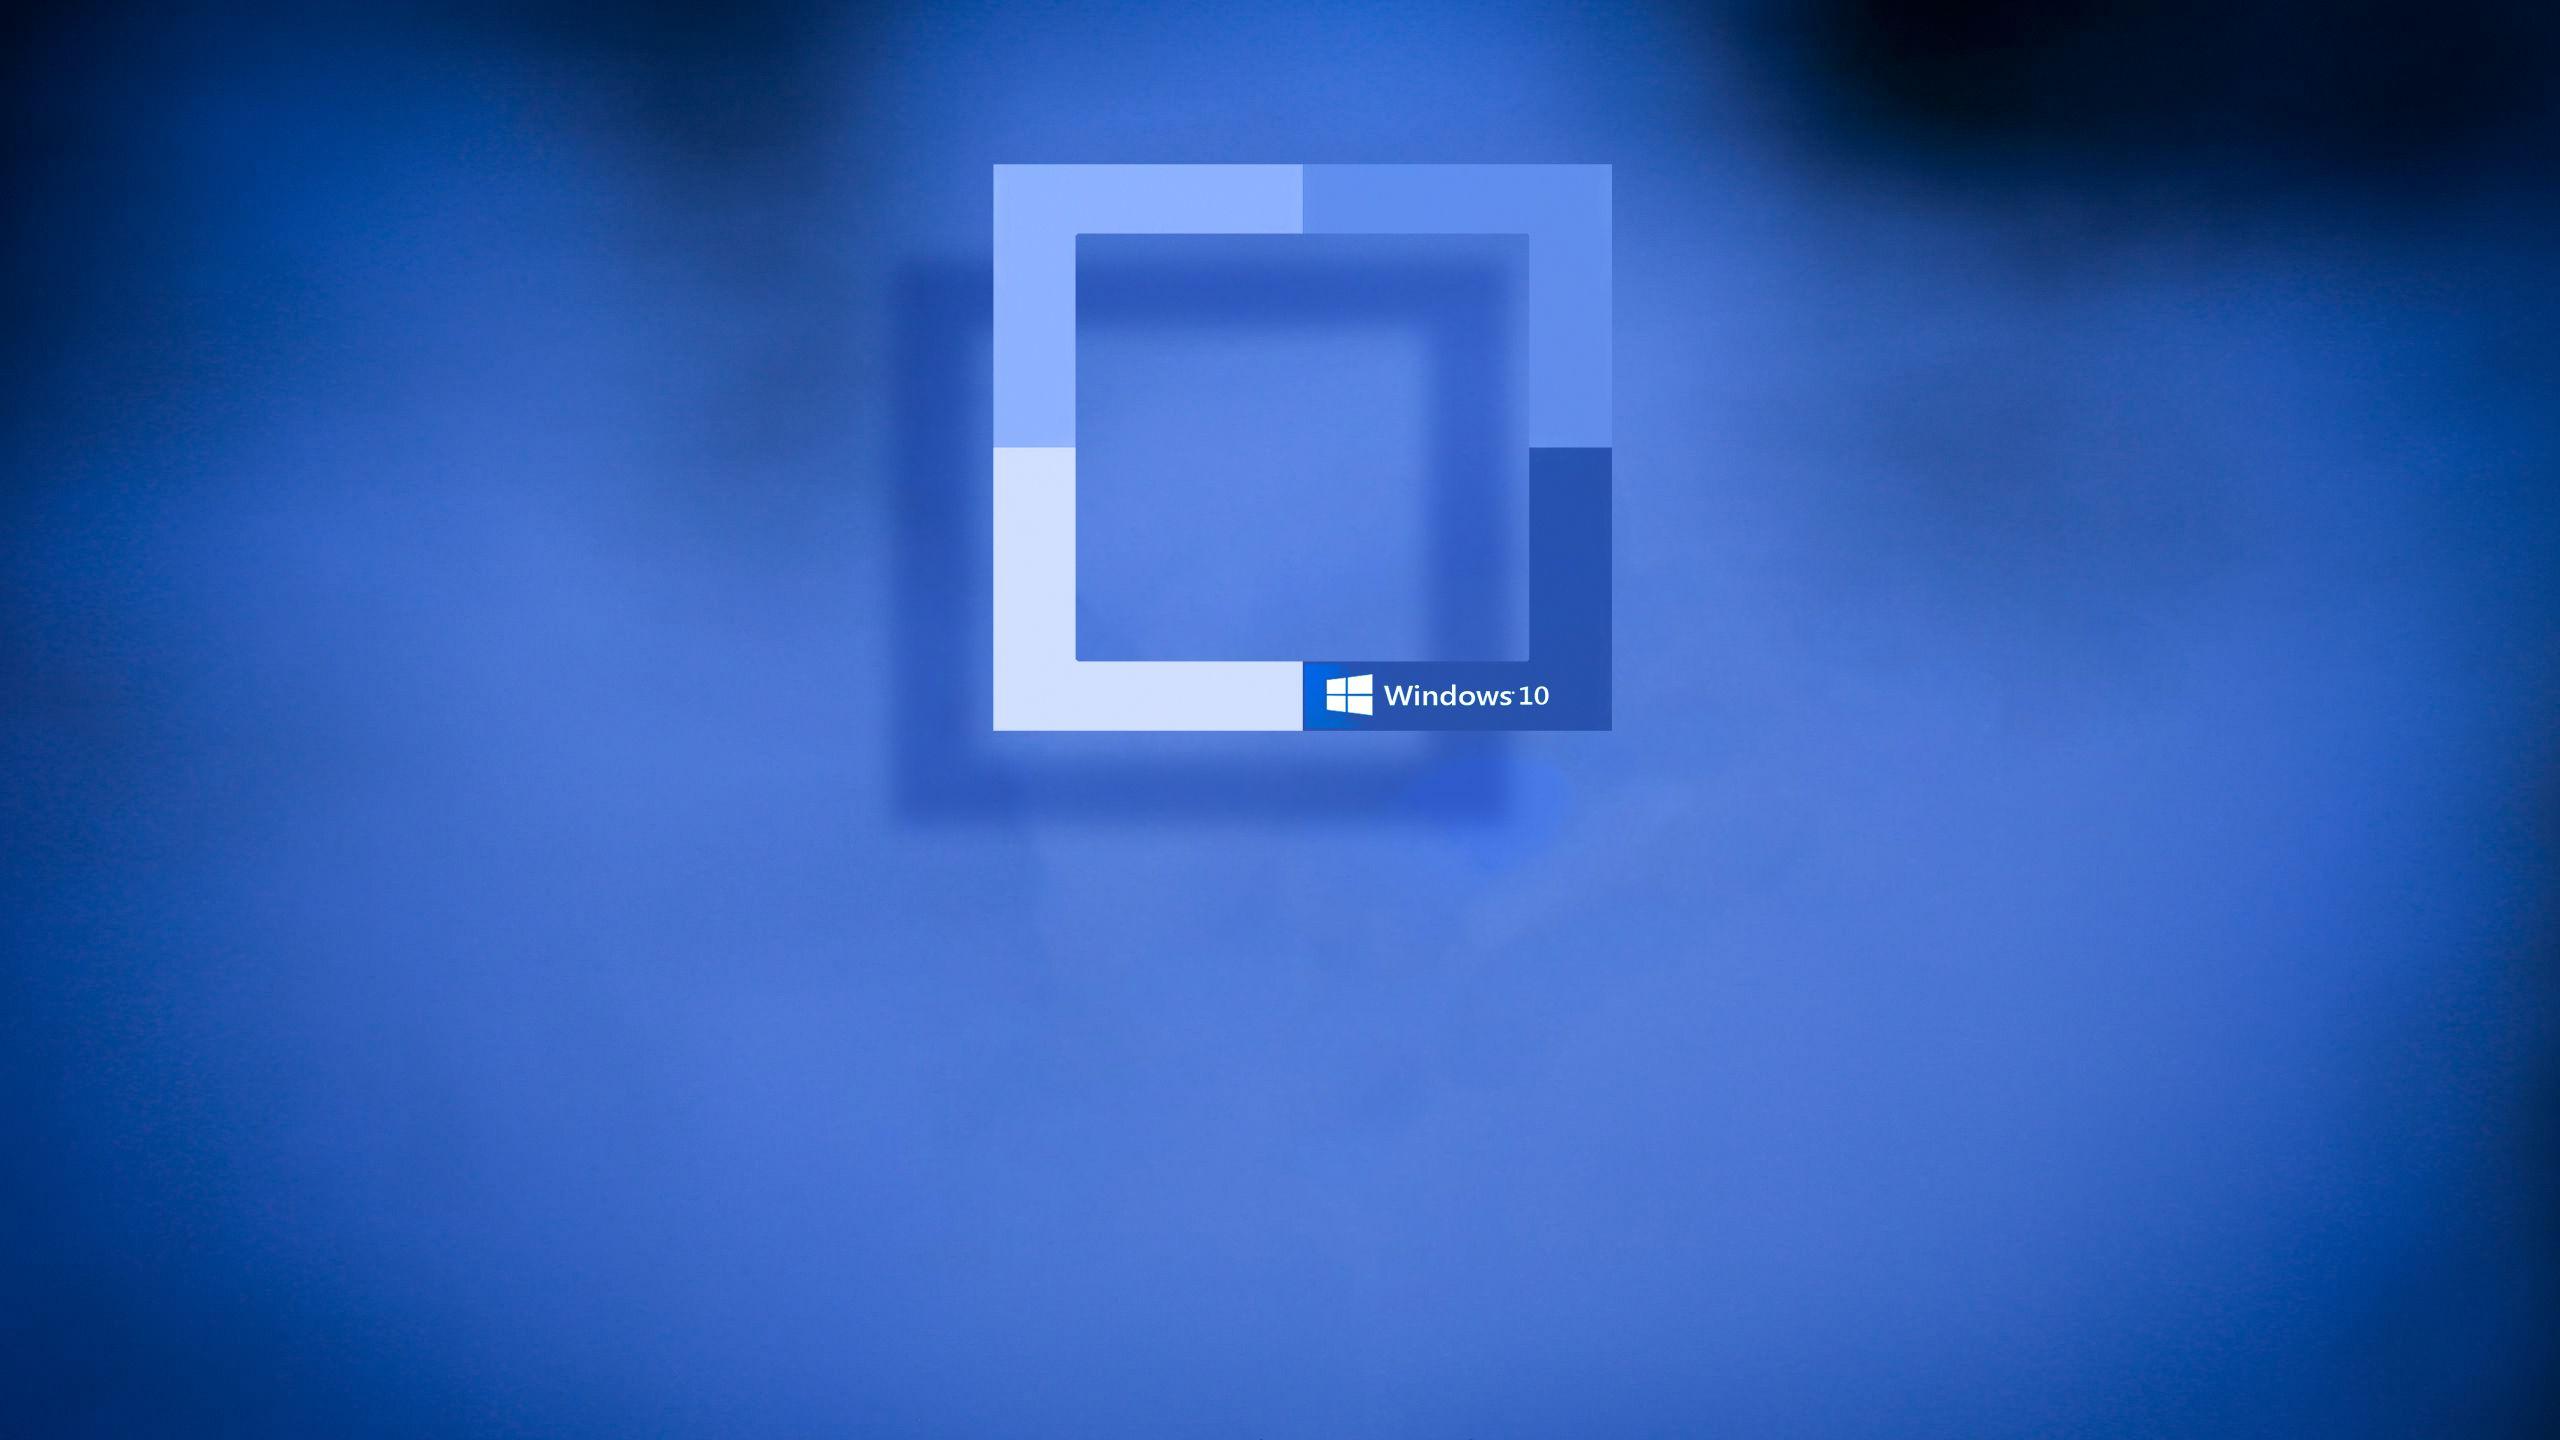 HD Wallpaper for Windows 10